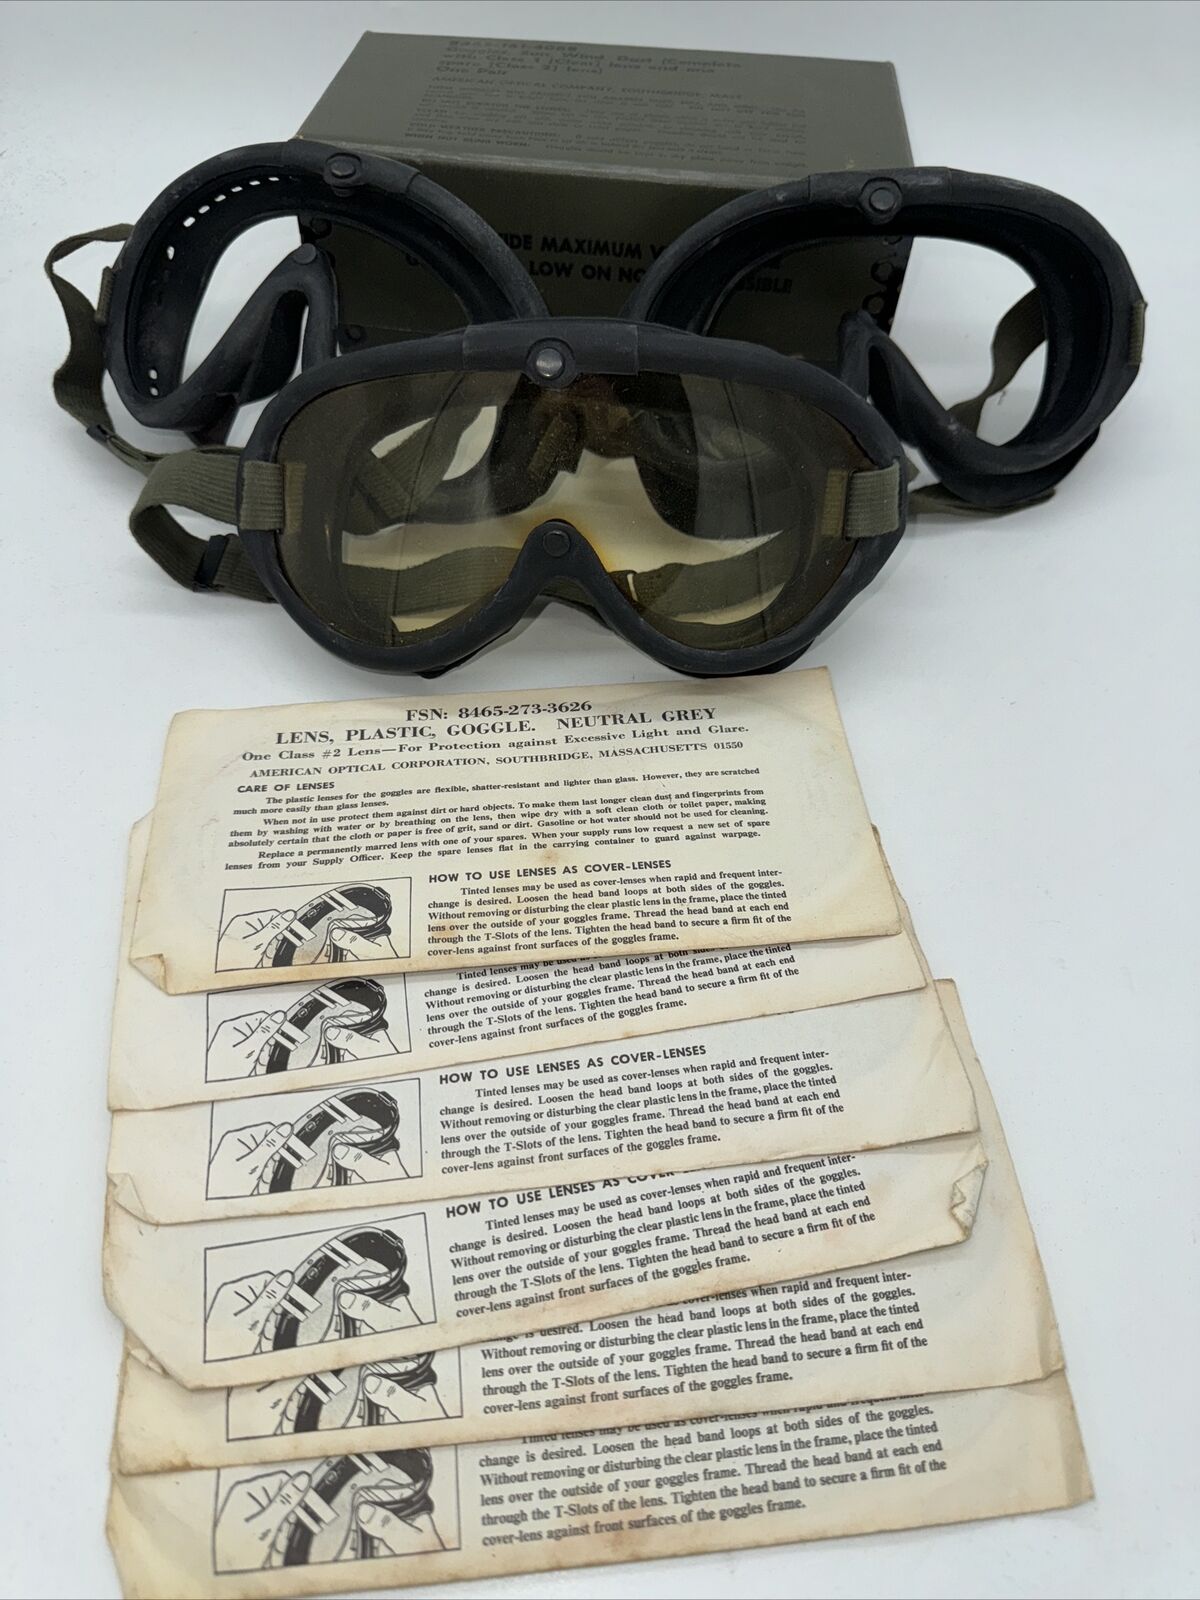 VTG Military Sun Wind Dust Plastic Lens Goggles #8465-161-4068 W/ Extras